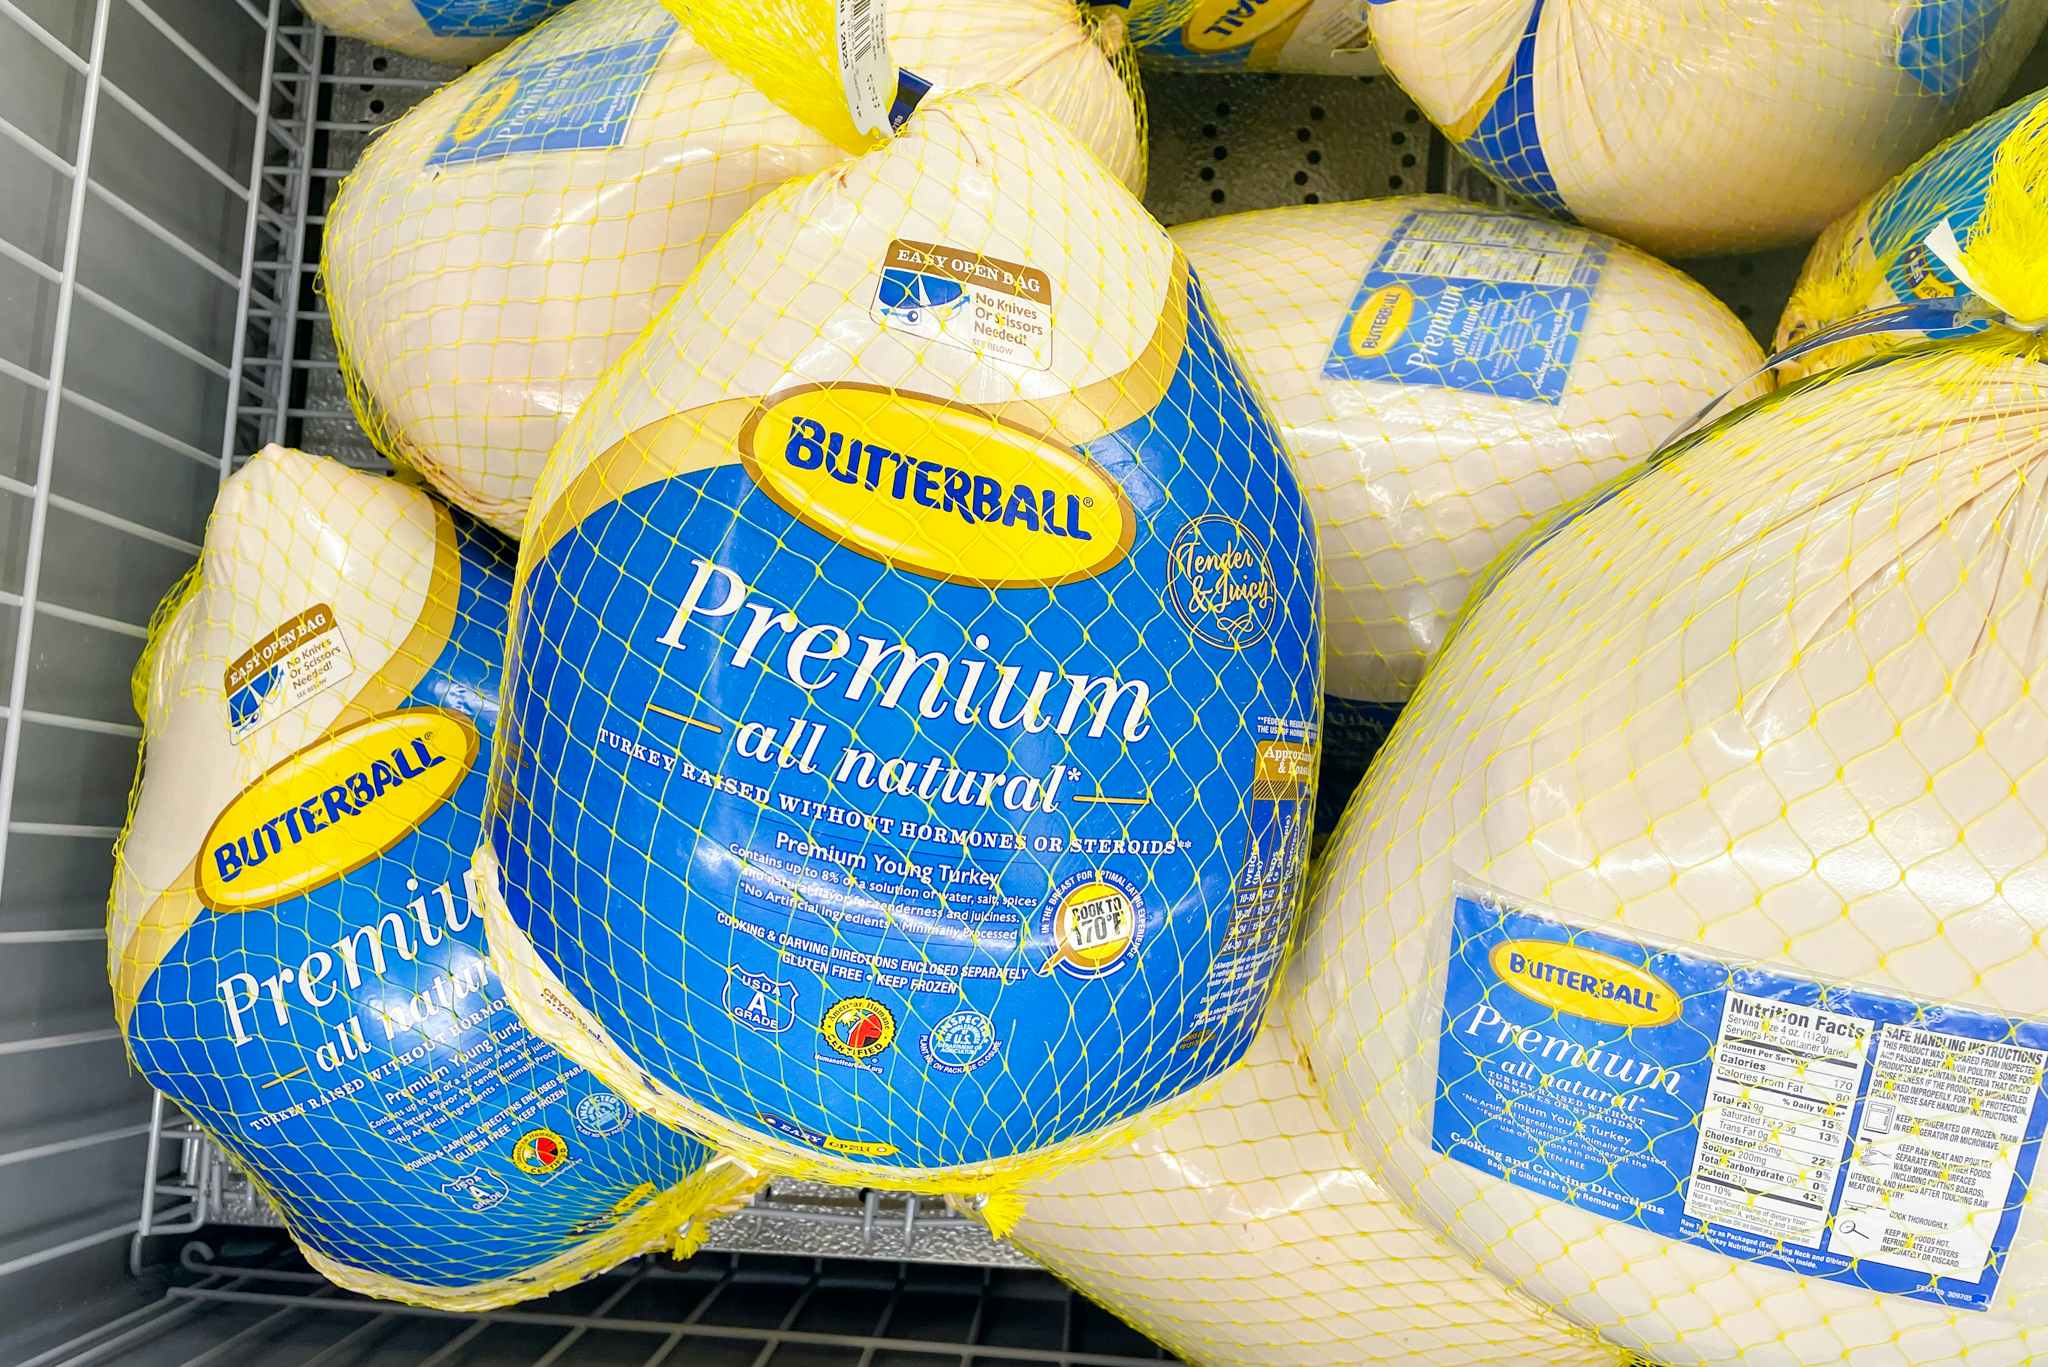 Butterball frozen turkeys in a cooler at Aldi